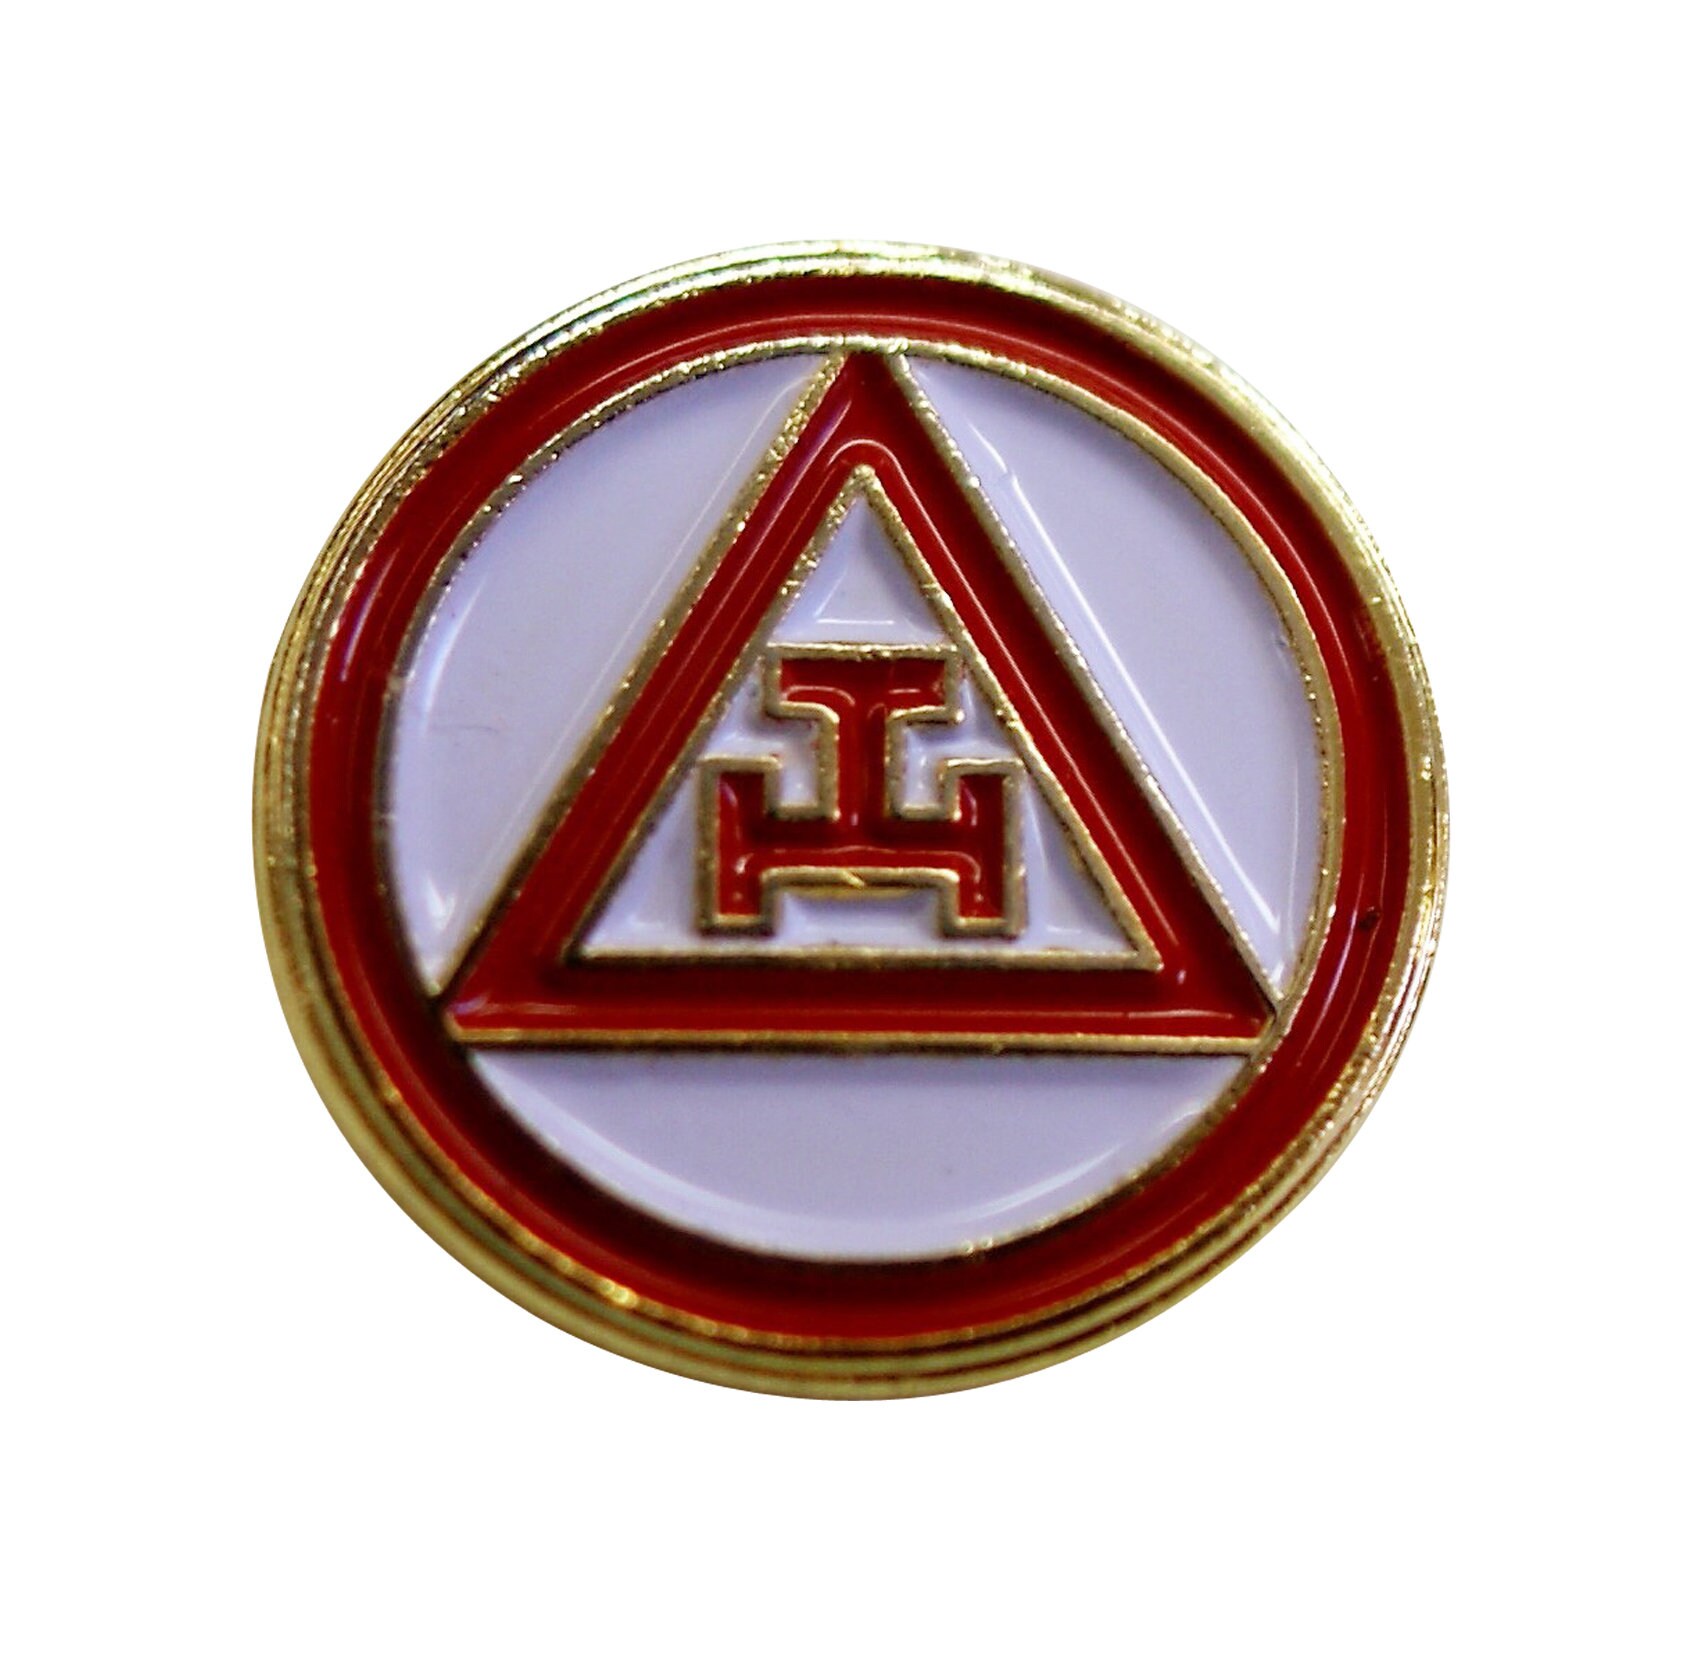 Royal Arch White Masonic Tote Bag Freemasons Red White Round Triple Tau